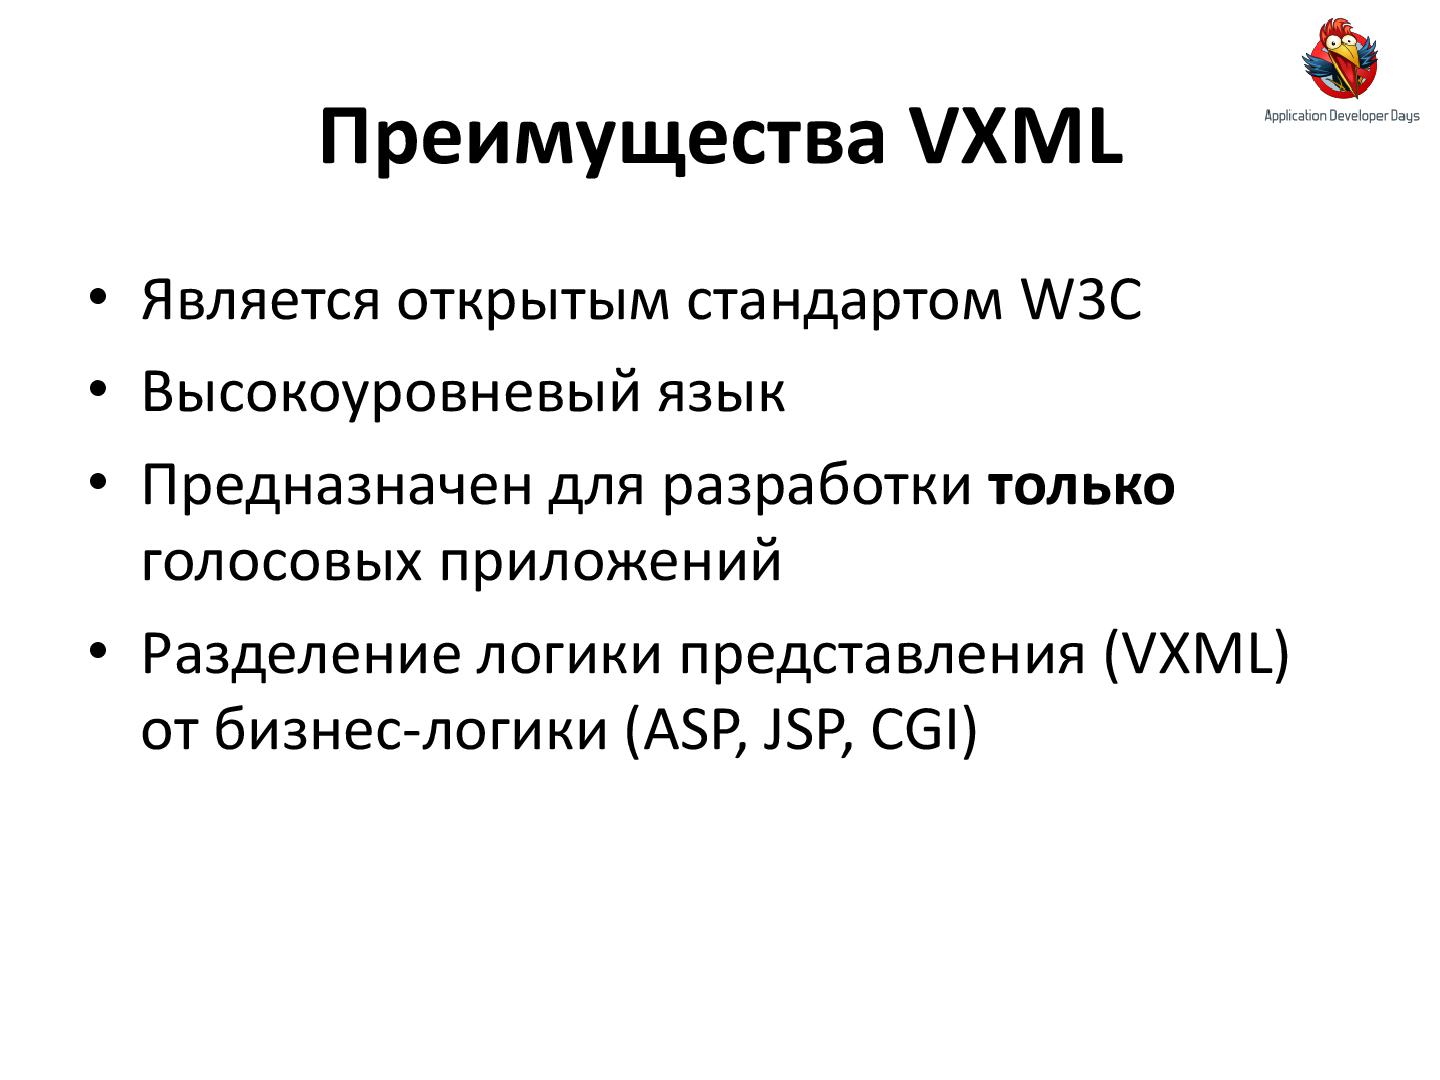 Файл:VoiceXML.Теория и практика проектирования голосовых приложений (Александр Ворон, ADD-2012).pdf